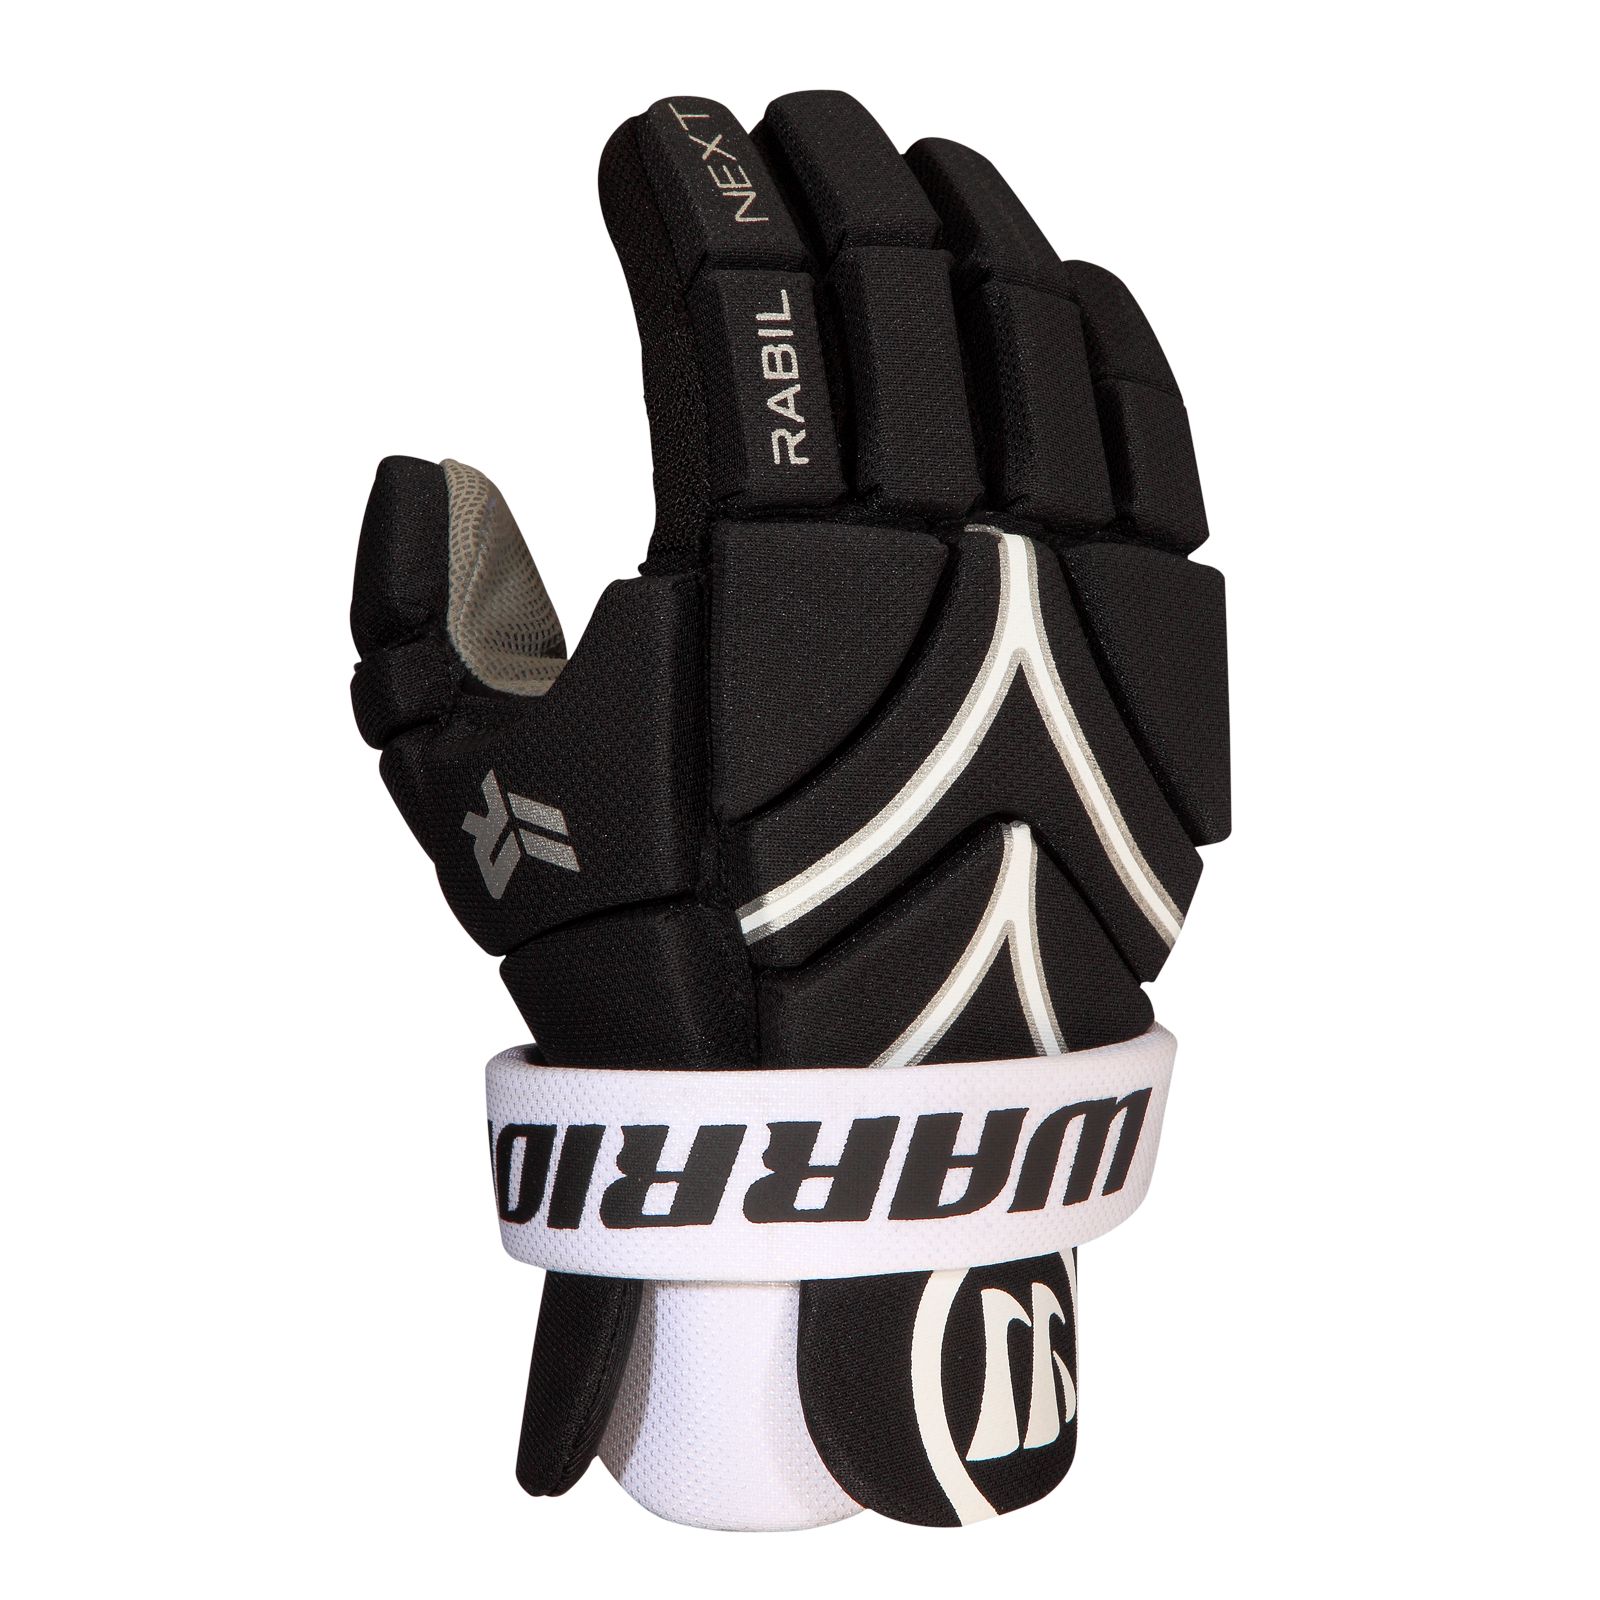 Rabil Next Glove (S/XS), Black image number 0